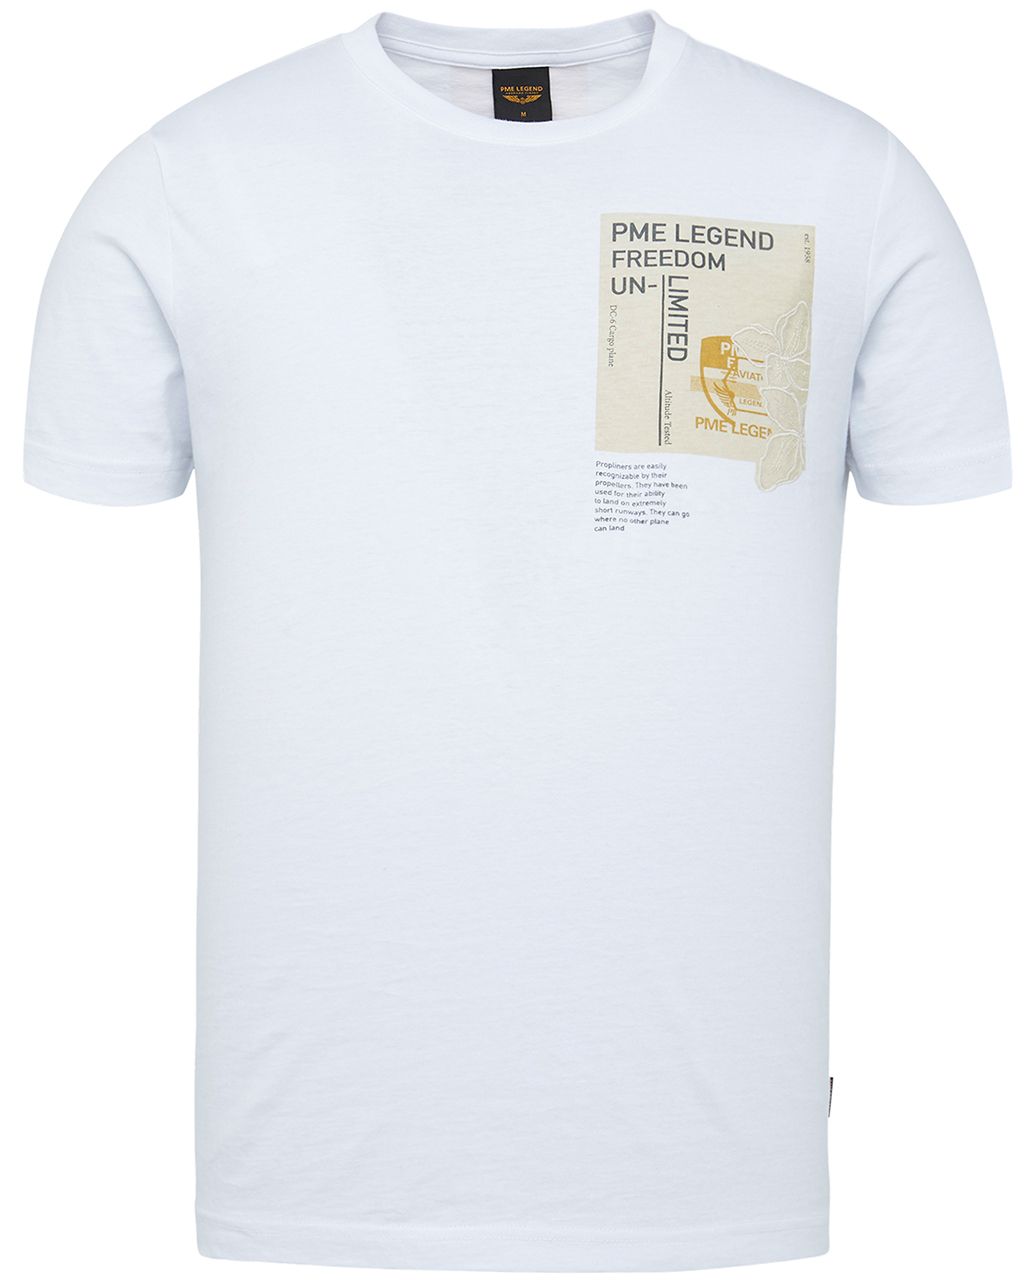 PME Legend T-shirt KM | Shop nu - Only for